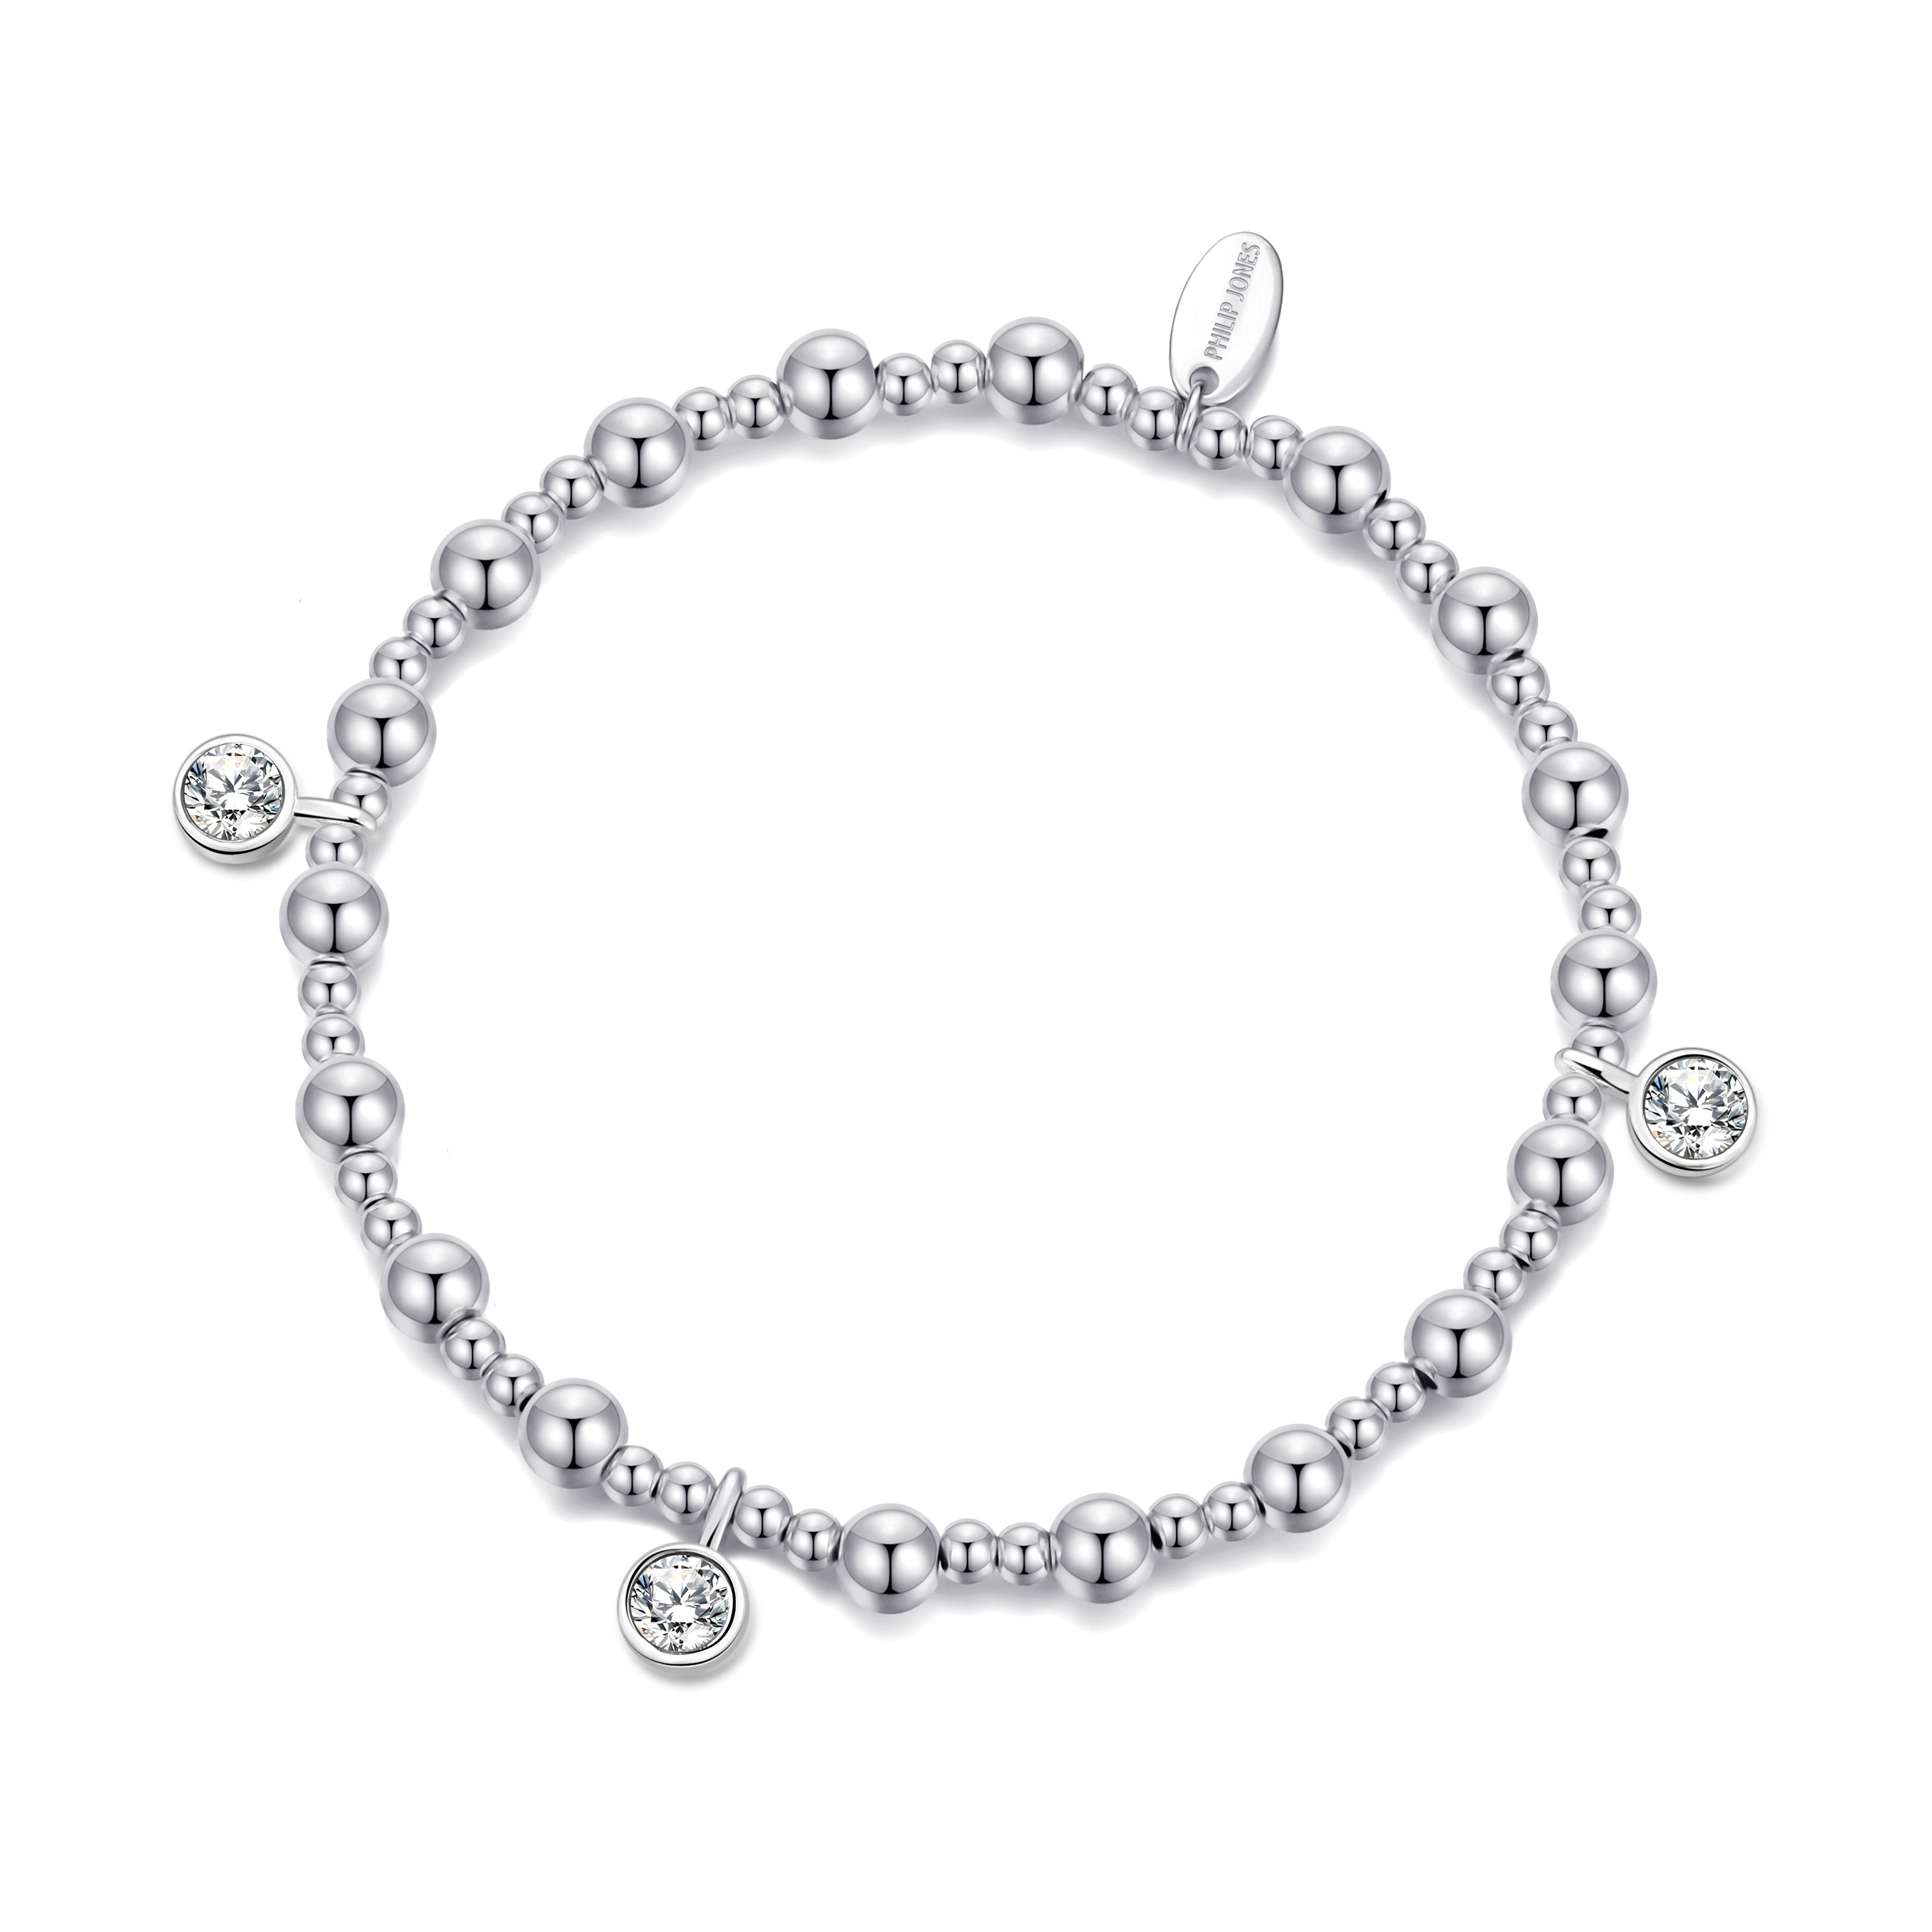 April (Diamond) Birthstone Stretch Charm Bracelet with Quote Gift Box